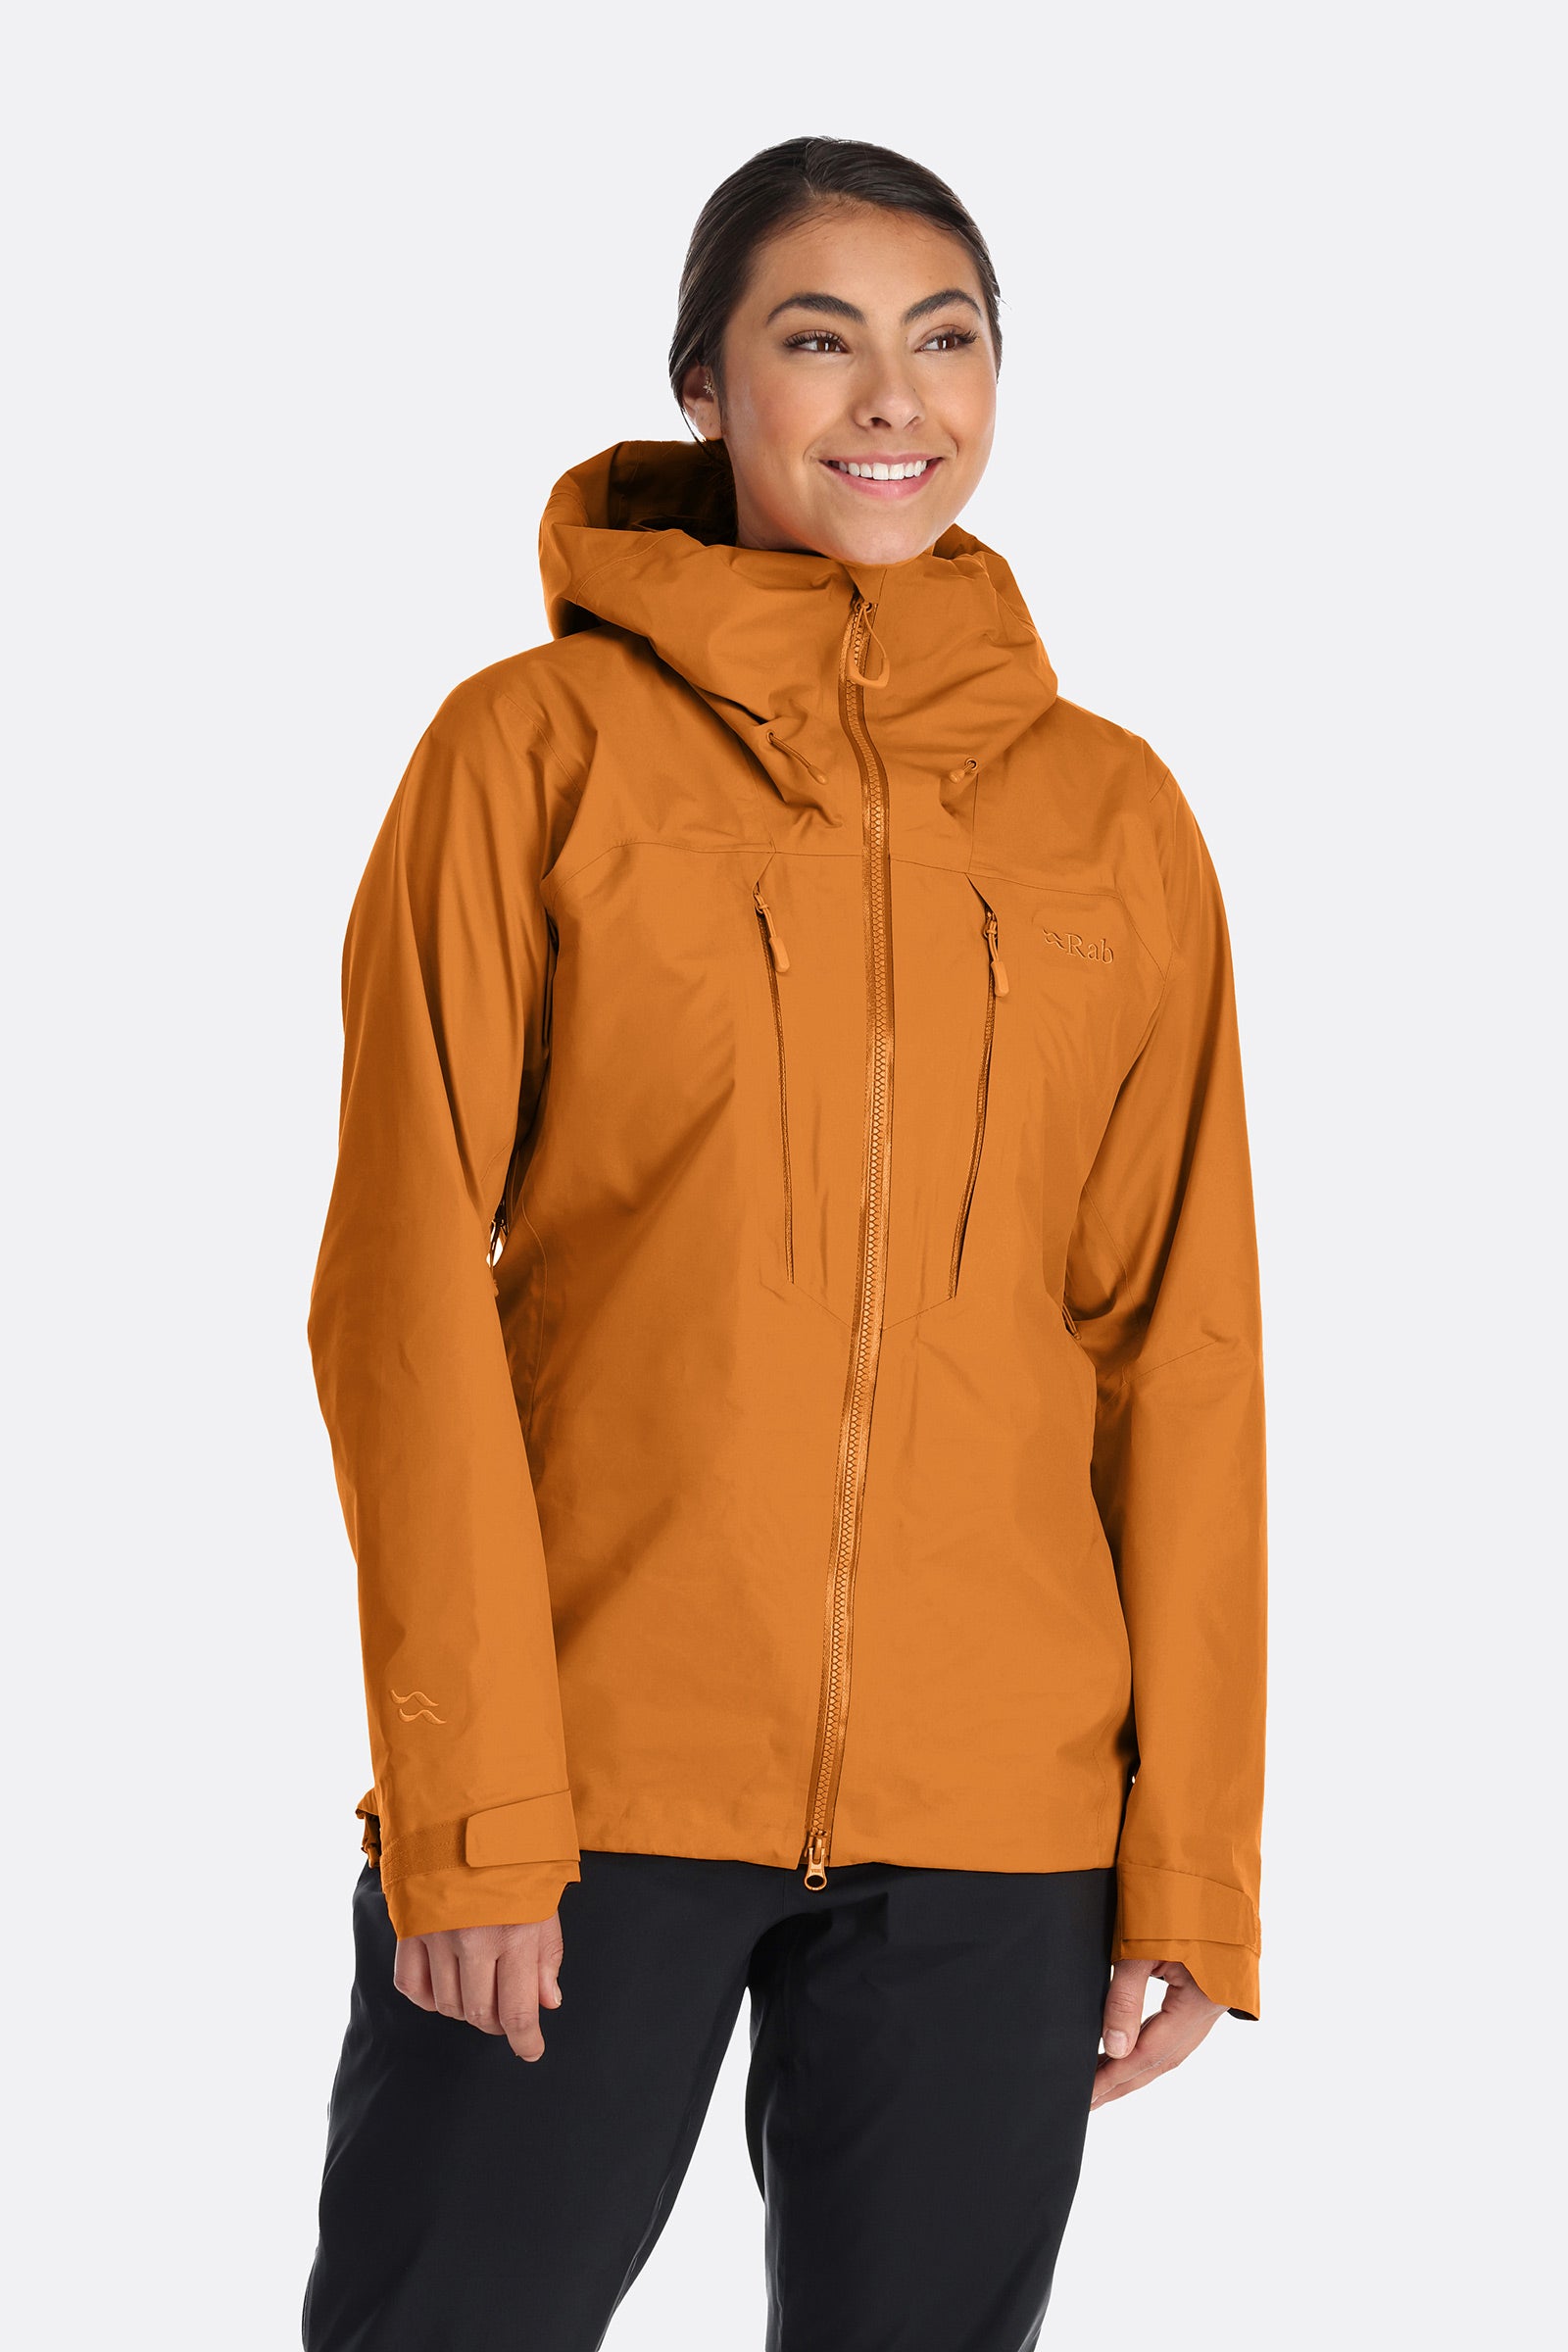 Women's Latok Alpine GORE-TEX® Pro Jacket Marmalade